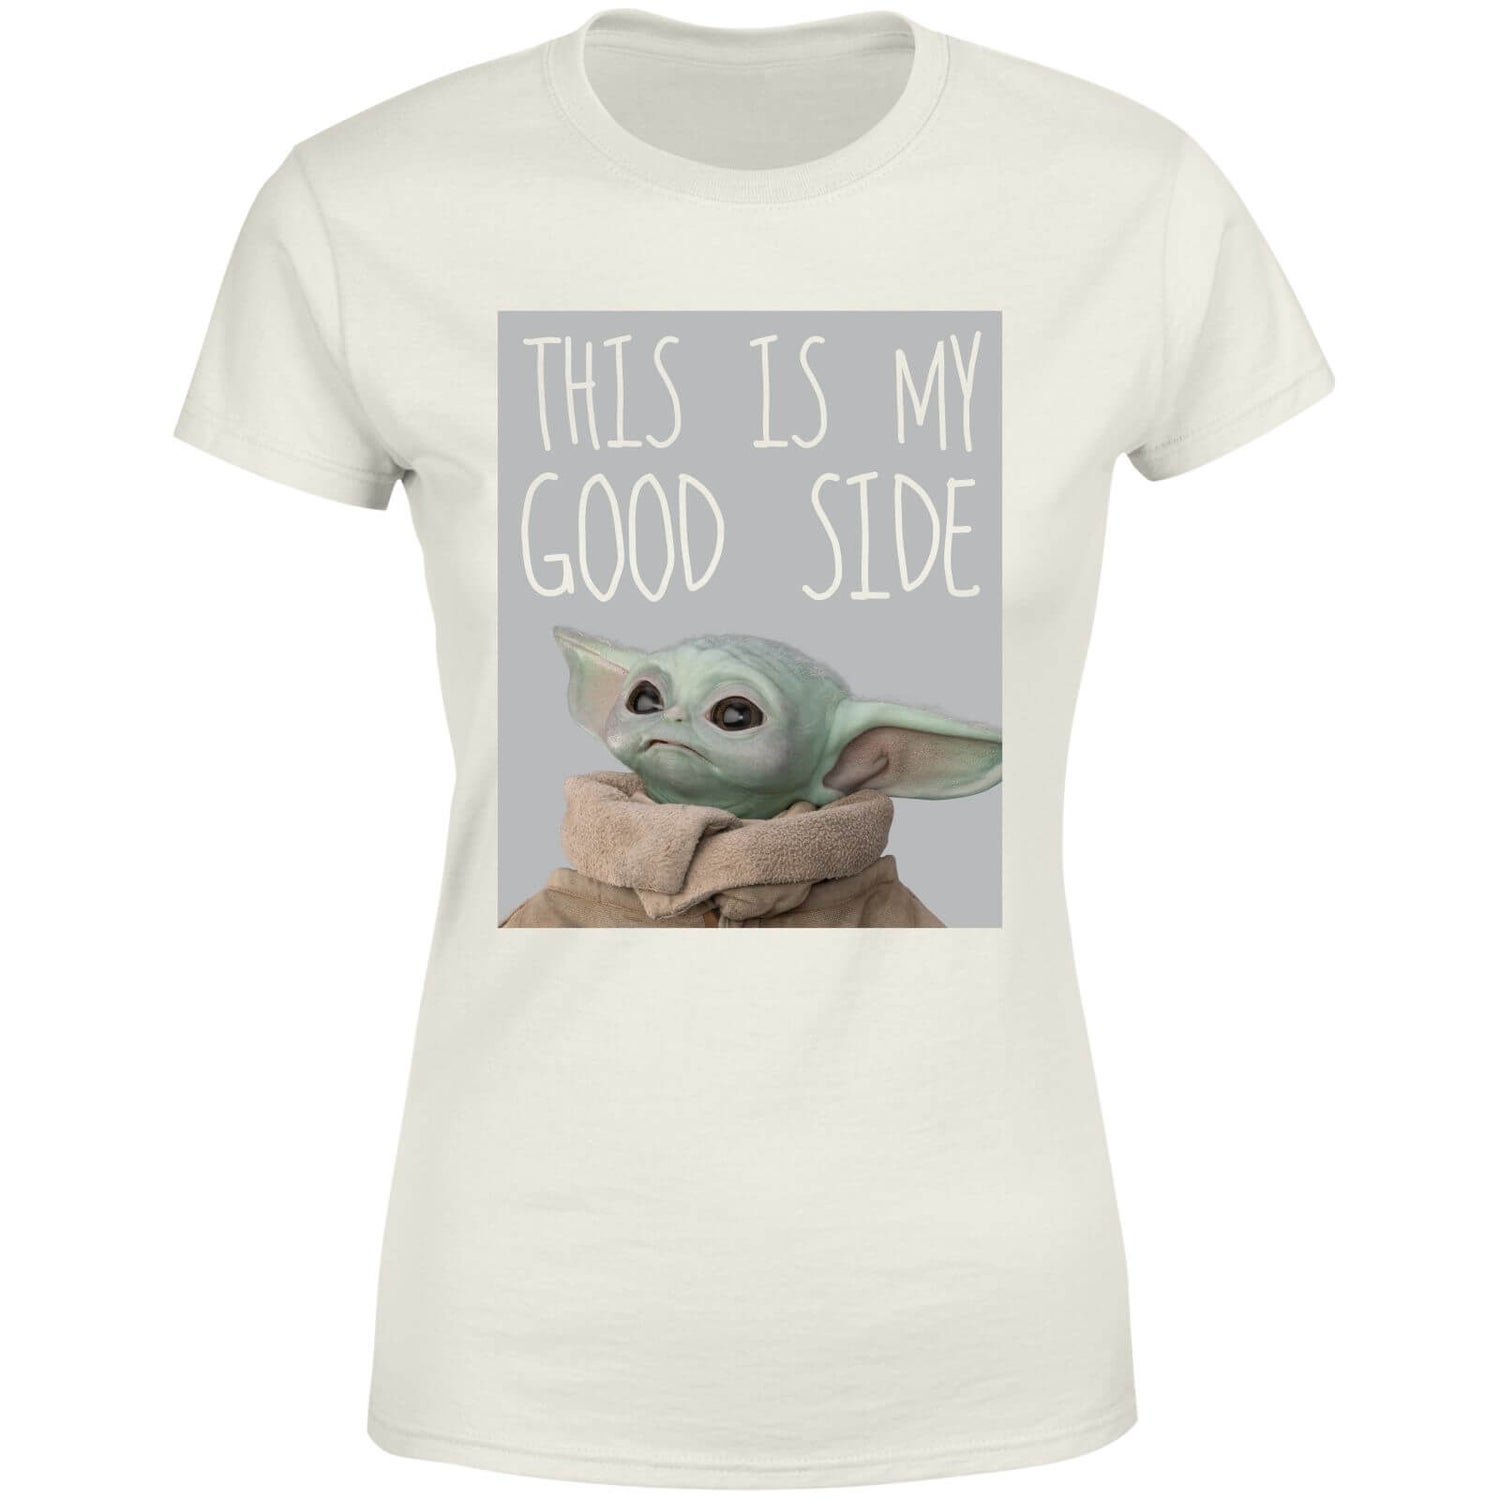 Star Wars The Mandalorian The Child Good Side Women's T-Shirt - Cream